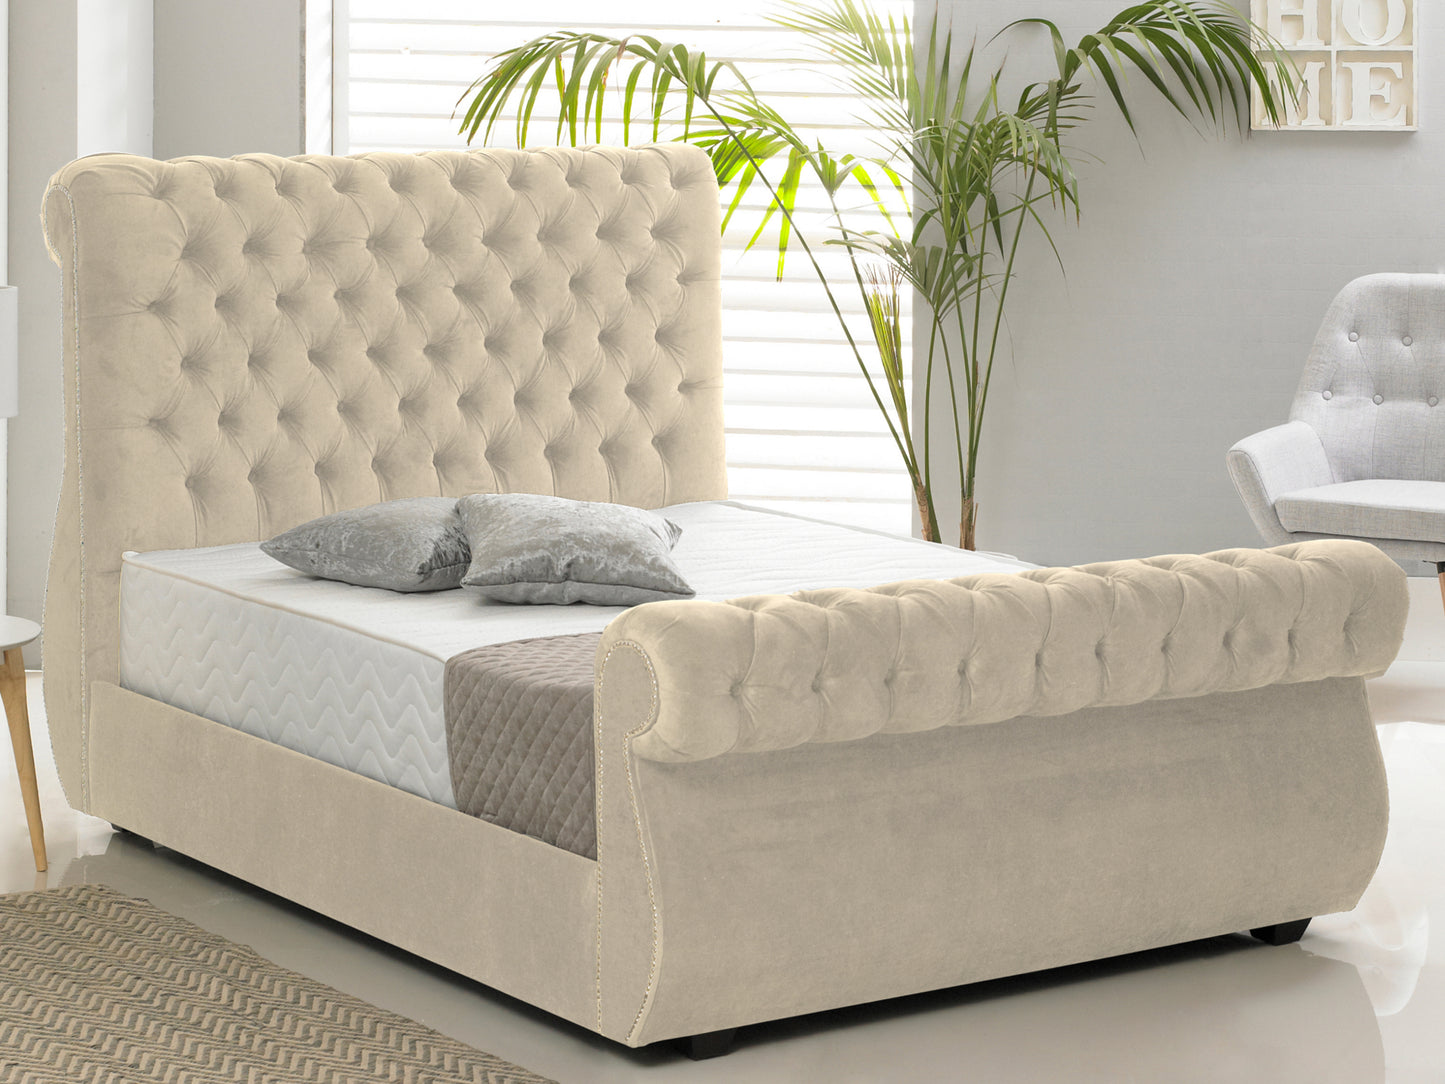 Chiswick Luxury Bed Frame in Hercules Cream